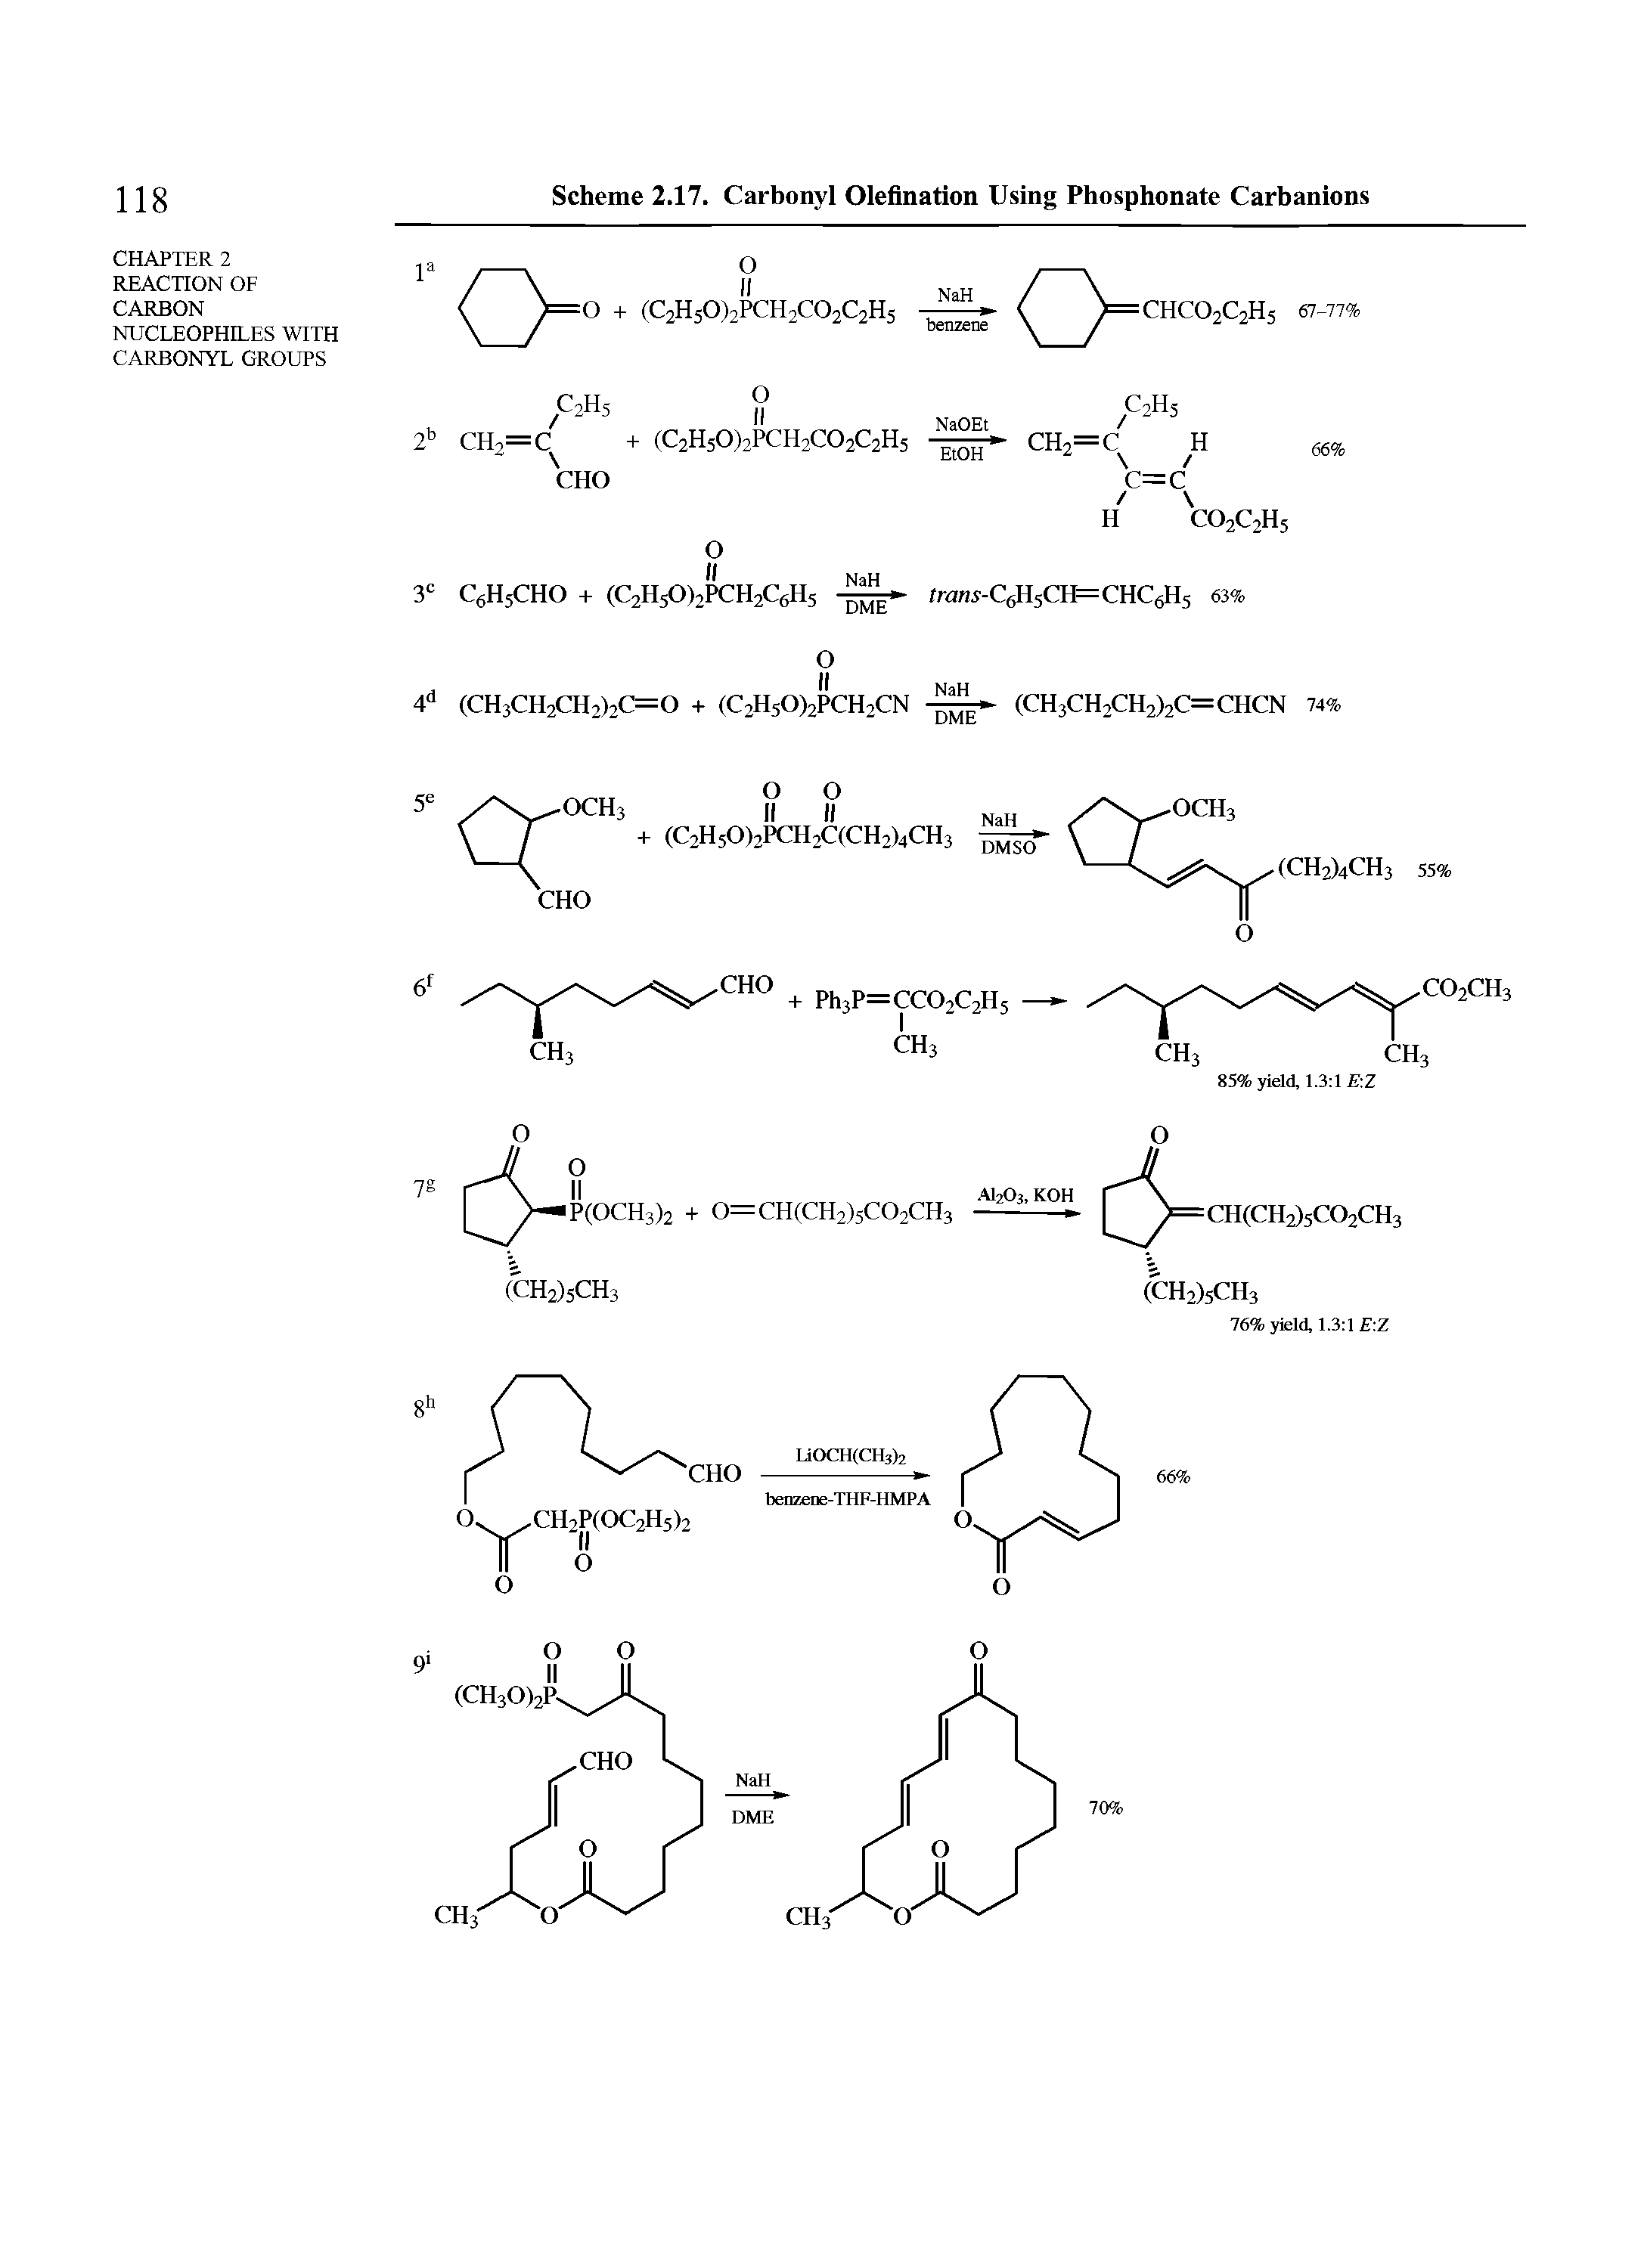 Scheme 2.17. Carbonyl Oleflnation Using Phosphonate Carbanions...